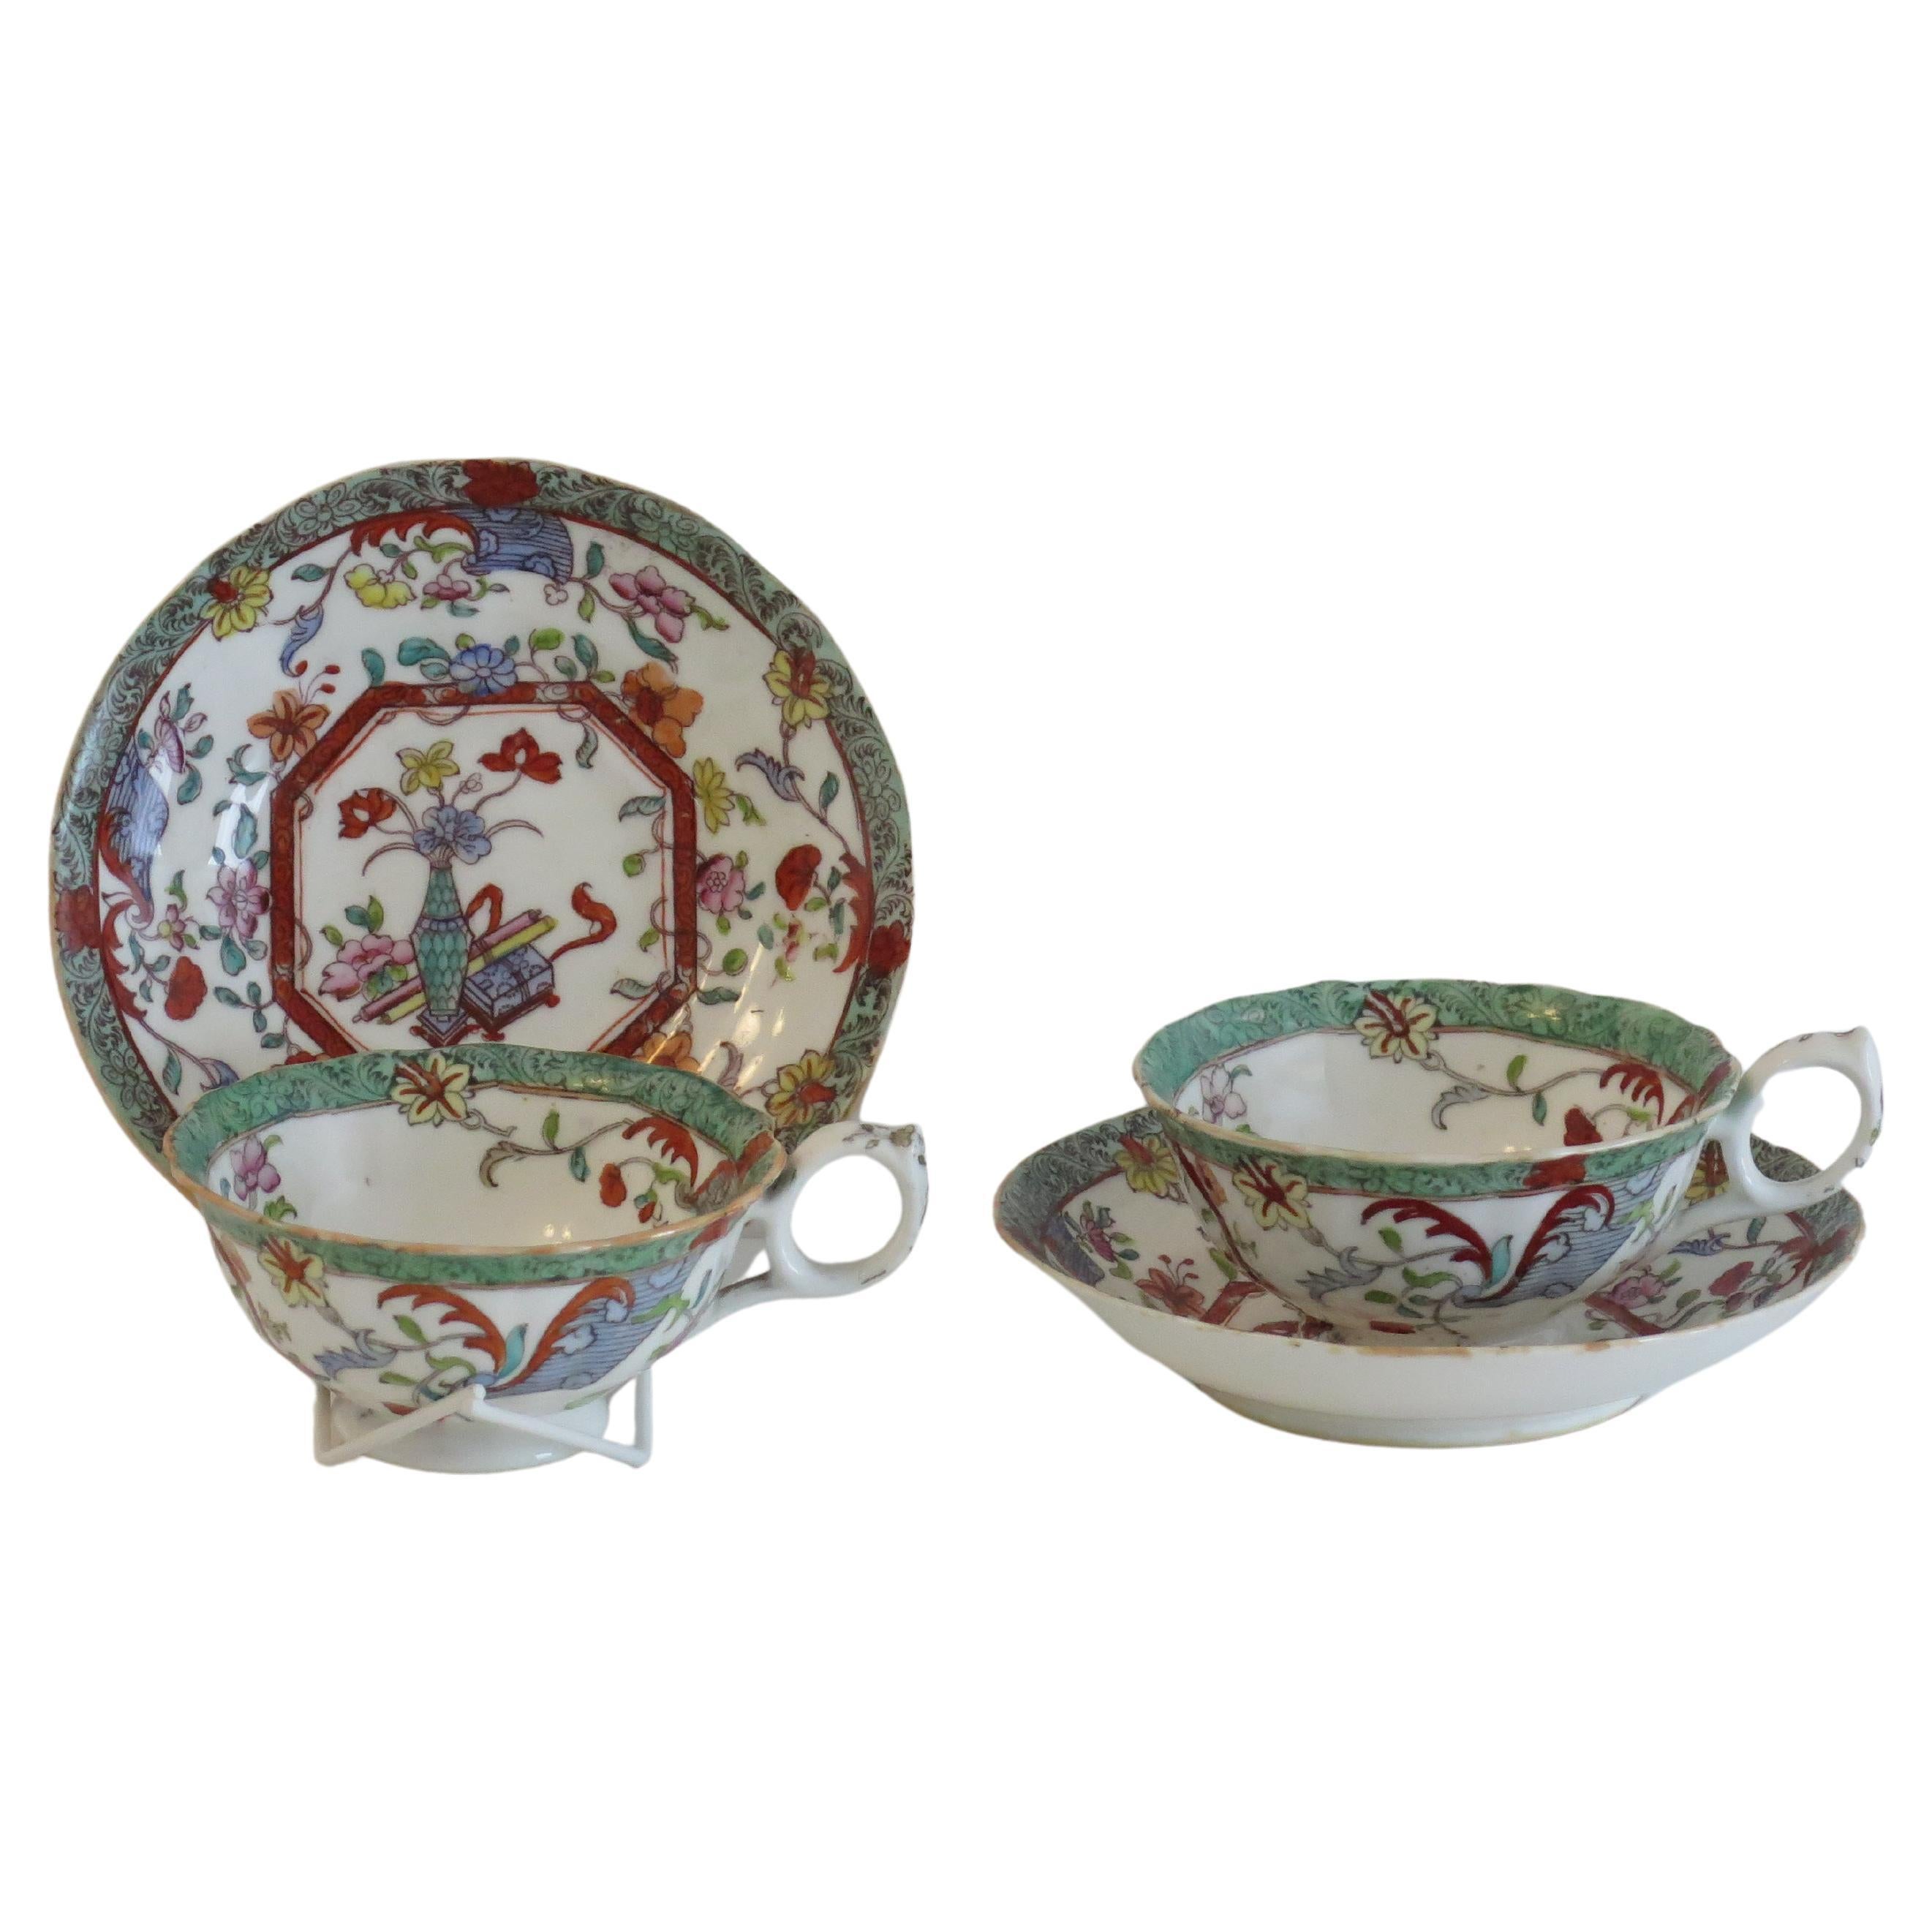 William IVth PAIR-(A) of C J Masons Cups & Saucers Porcelain Ptn 223, Ca 1830